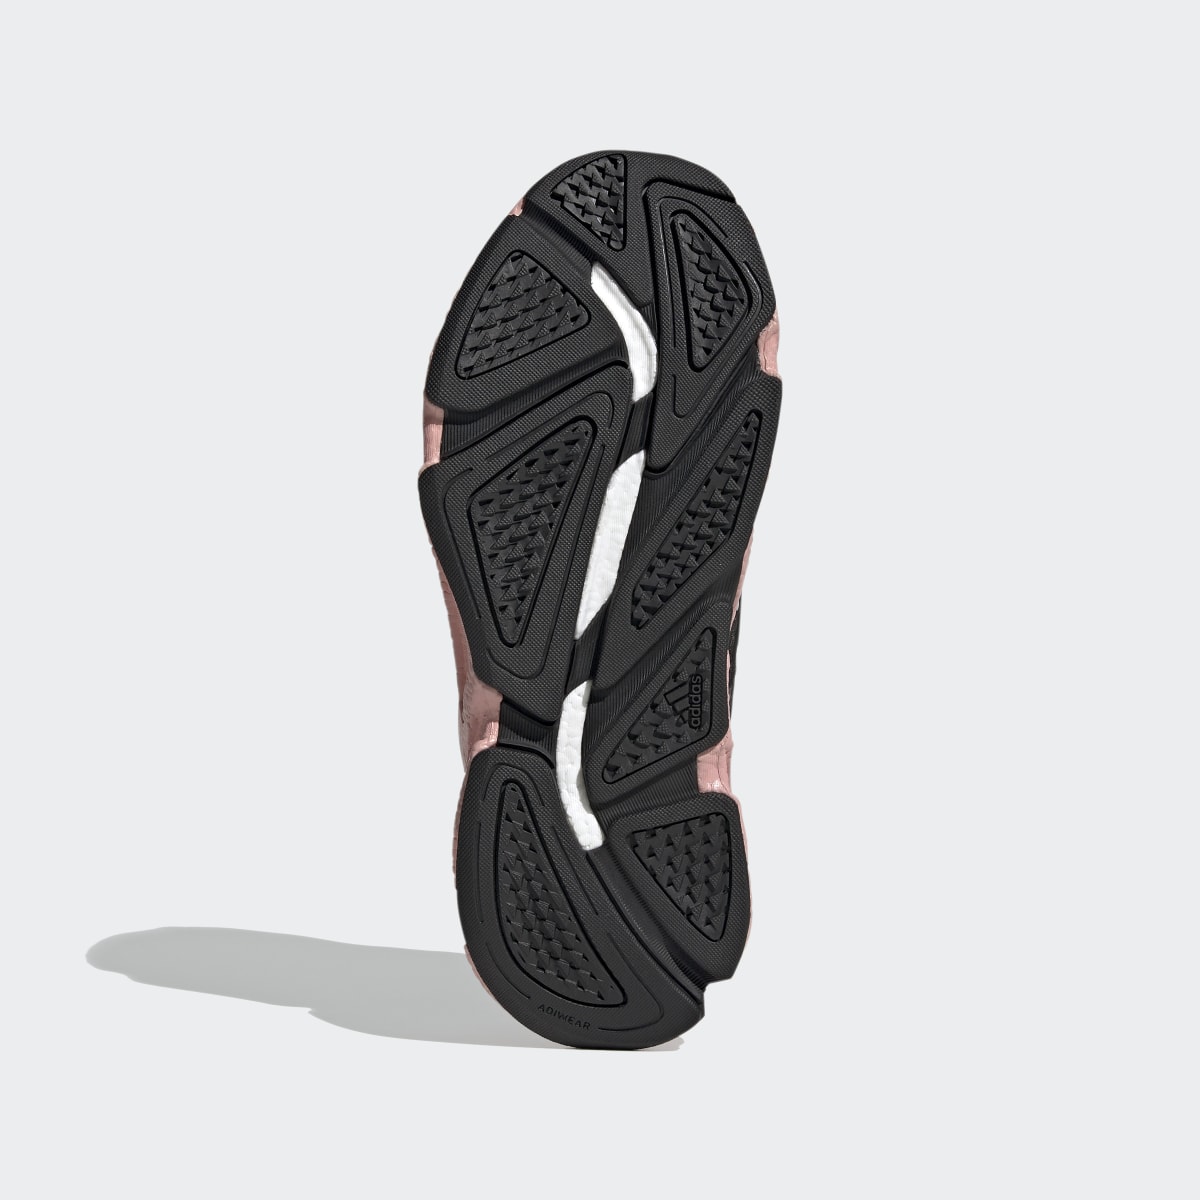 Adidas x Karlie Kloss X9000 Shoes. 6